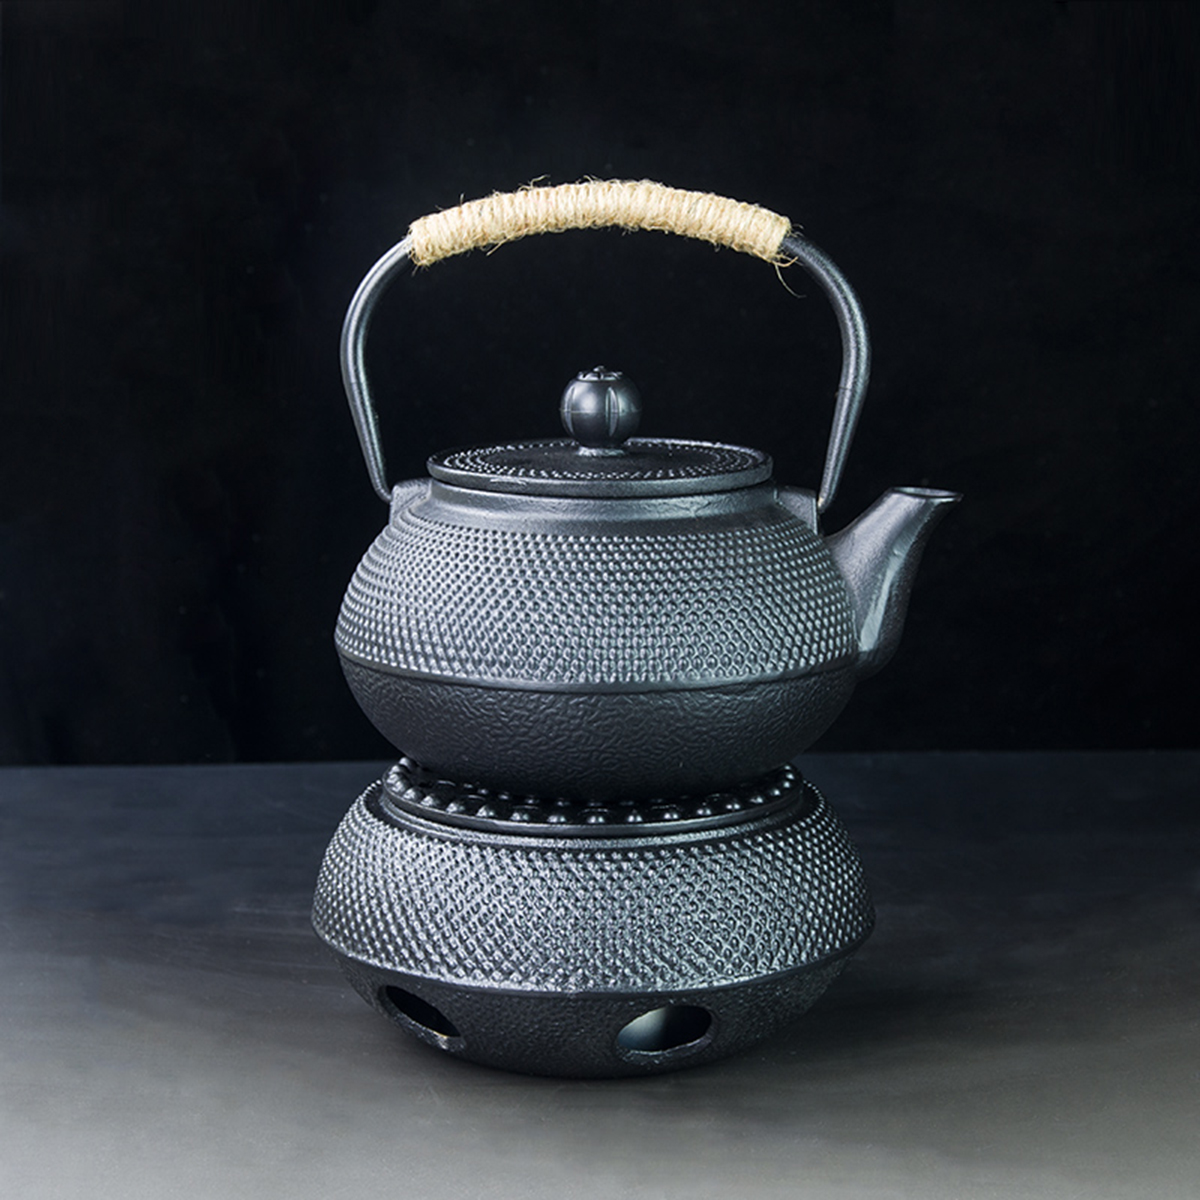 Cast-Iron-Teapot-Warmer-Charcoal-Stove-Tea-Pot-Holder-Japanese-Tea-Ceremony-1499922